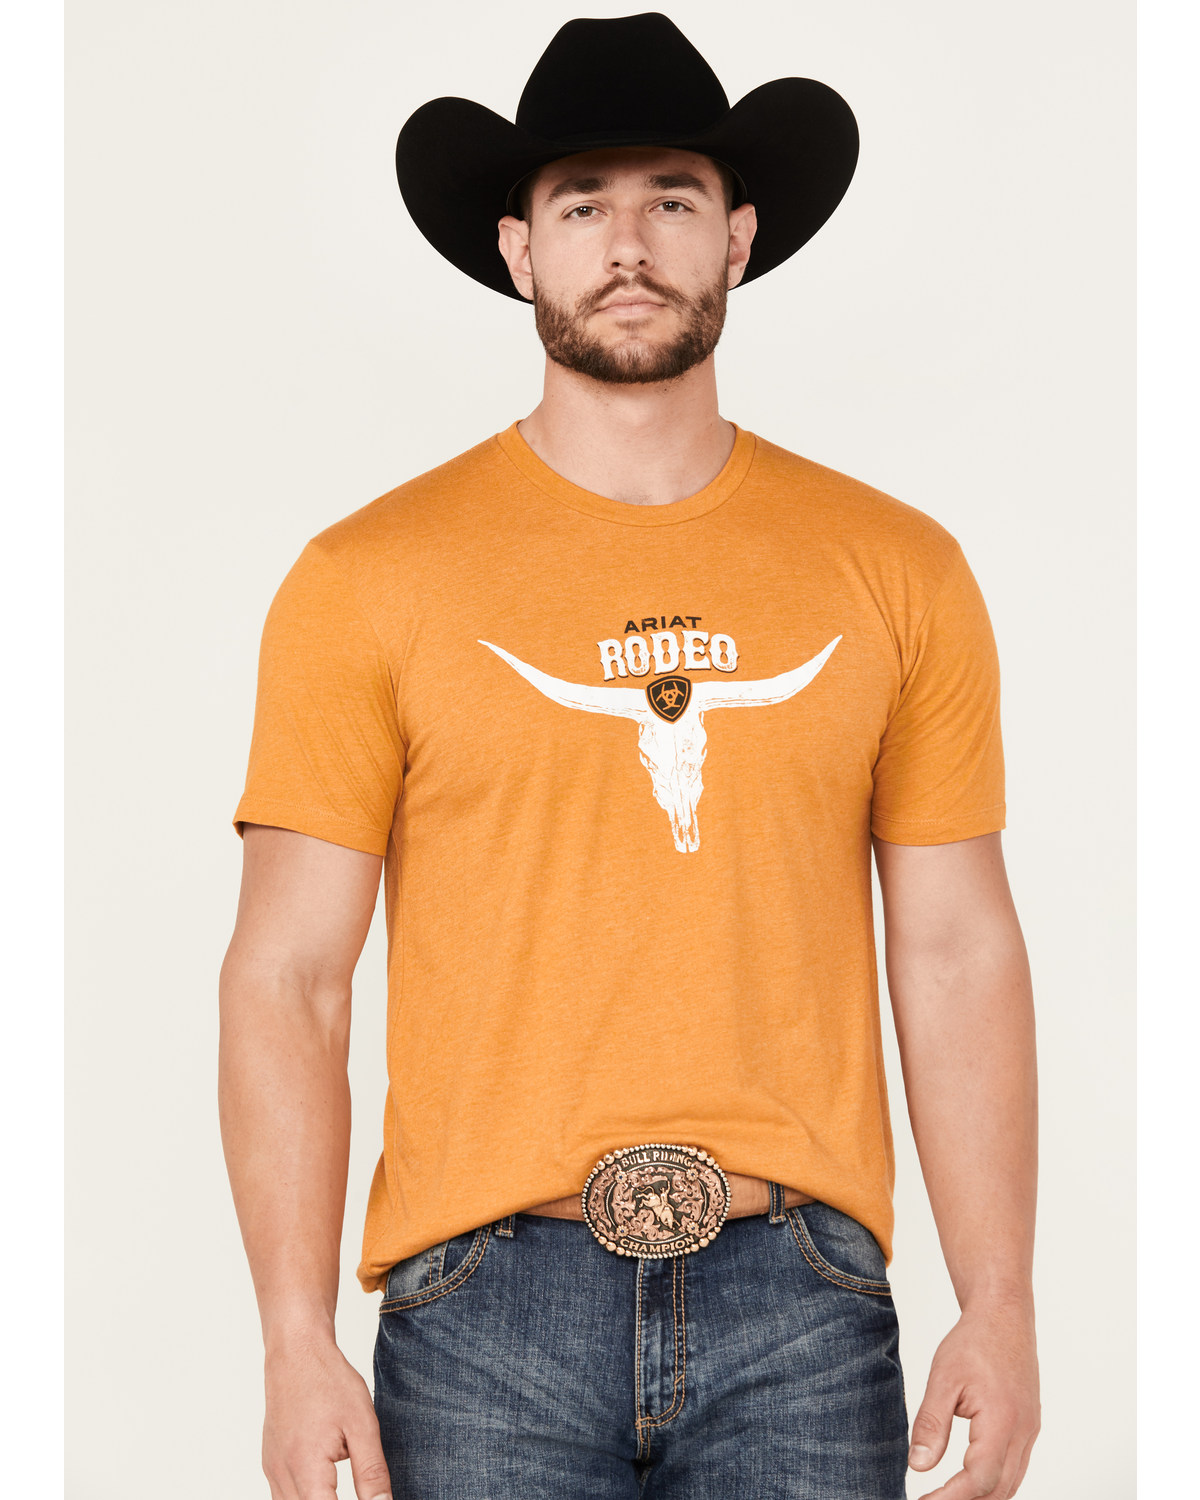 Ariat Men's Rodeo Skull Short Sleeve Graphic T-Shirt